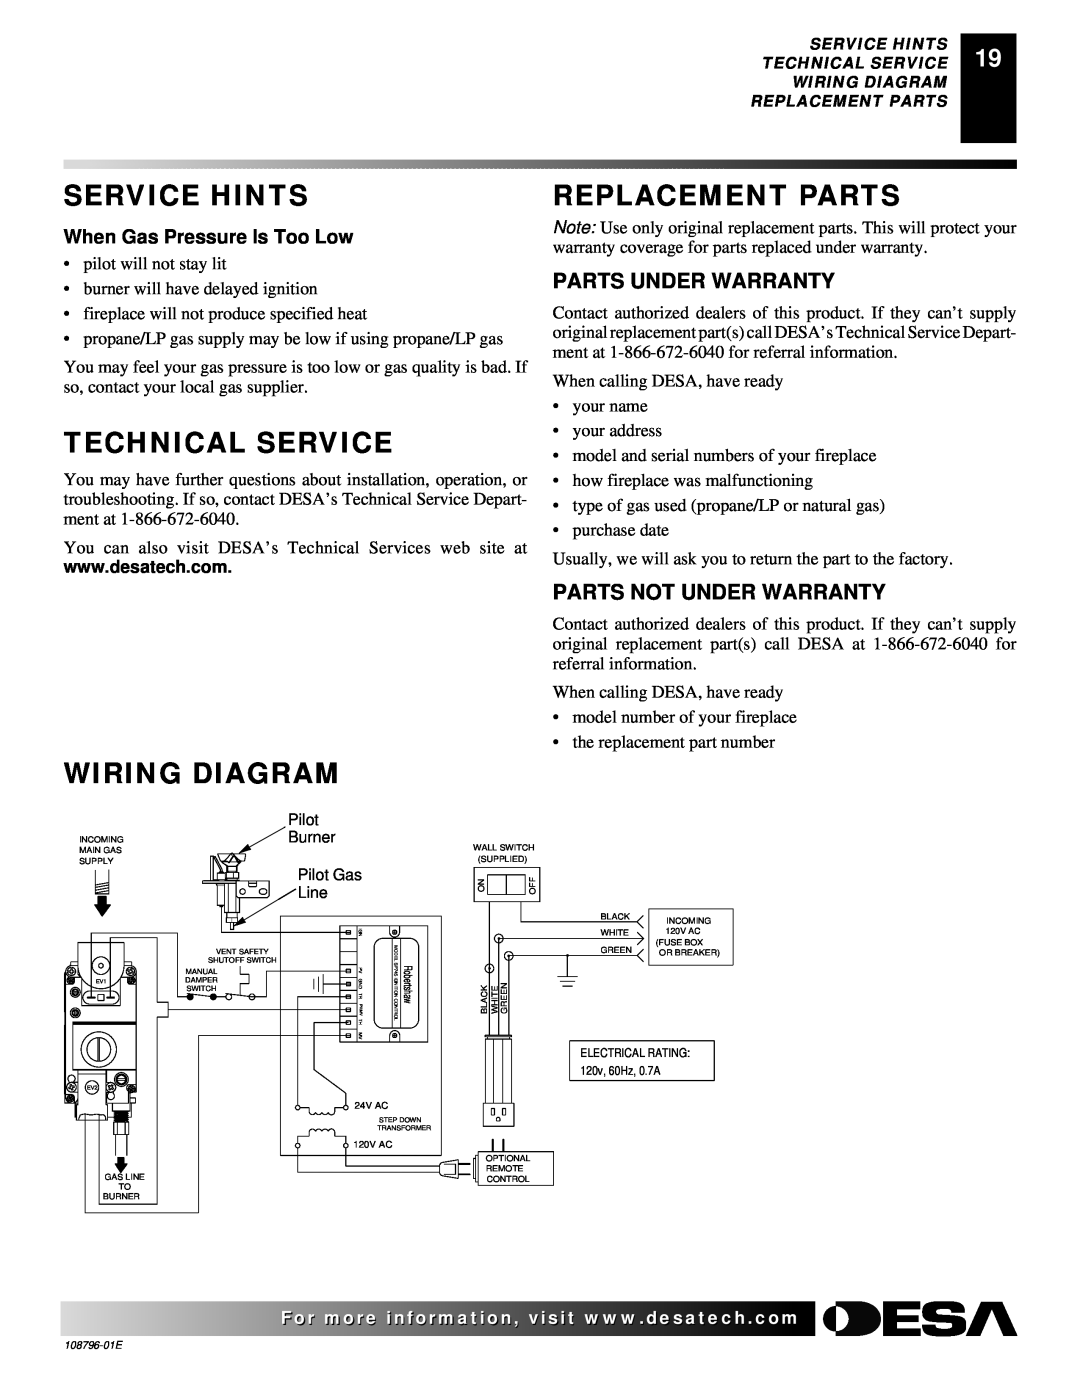 Desa VM36E(B, VM42E(B Service Hints, Technical Service, Wiring Diagram, Replacement Parts, Parts Under Warranty 